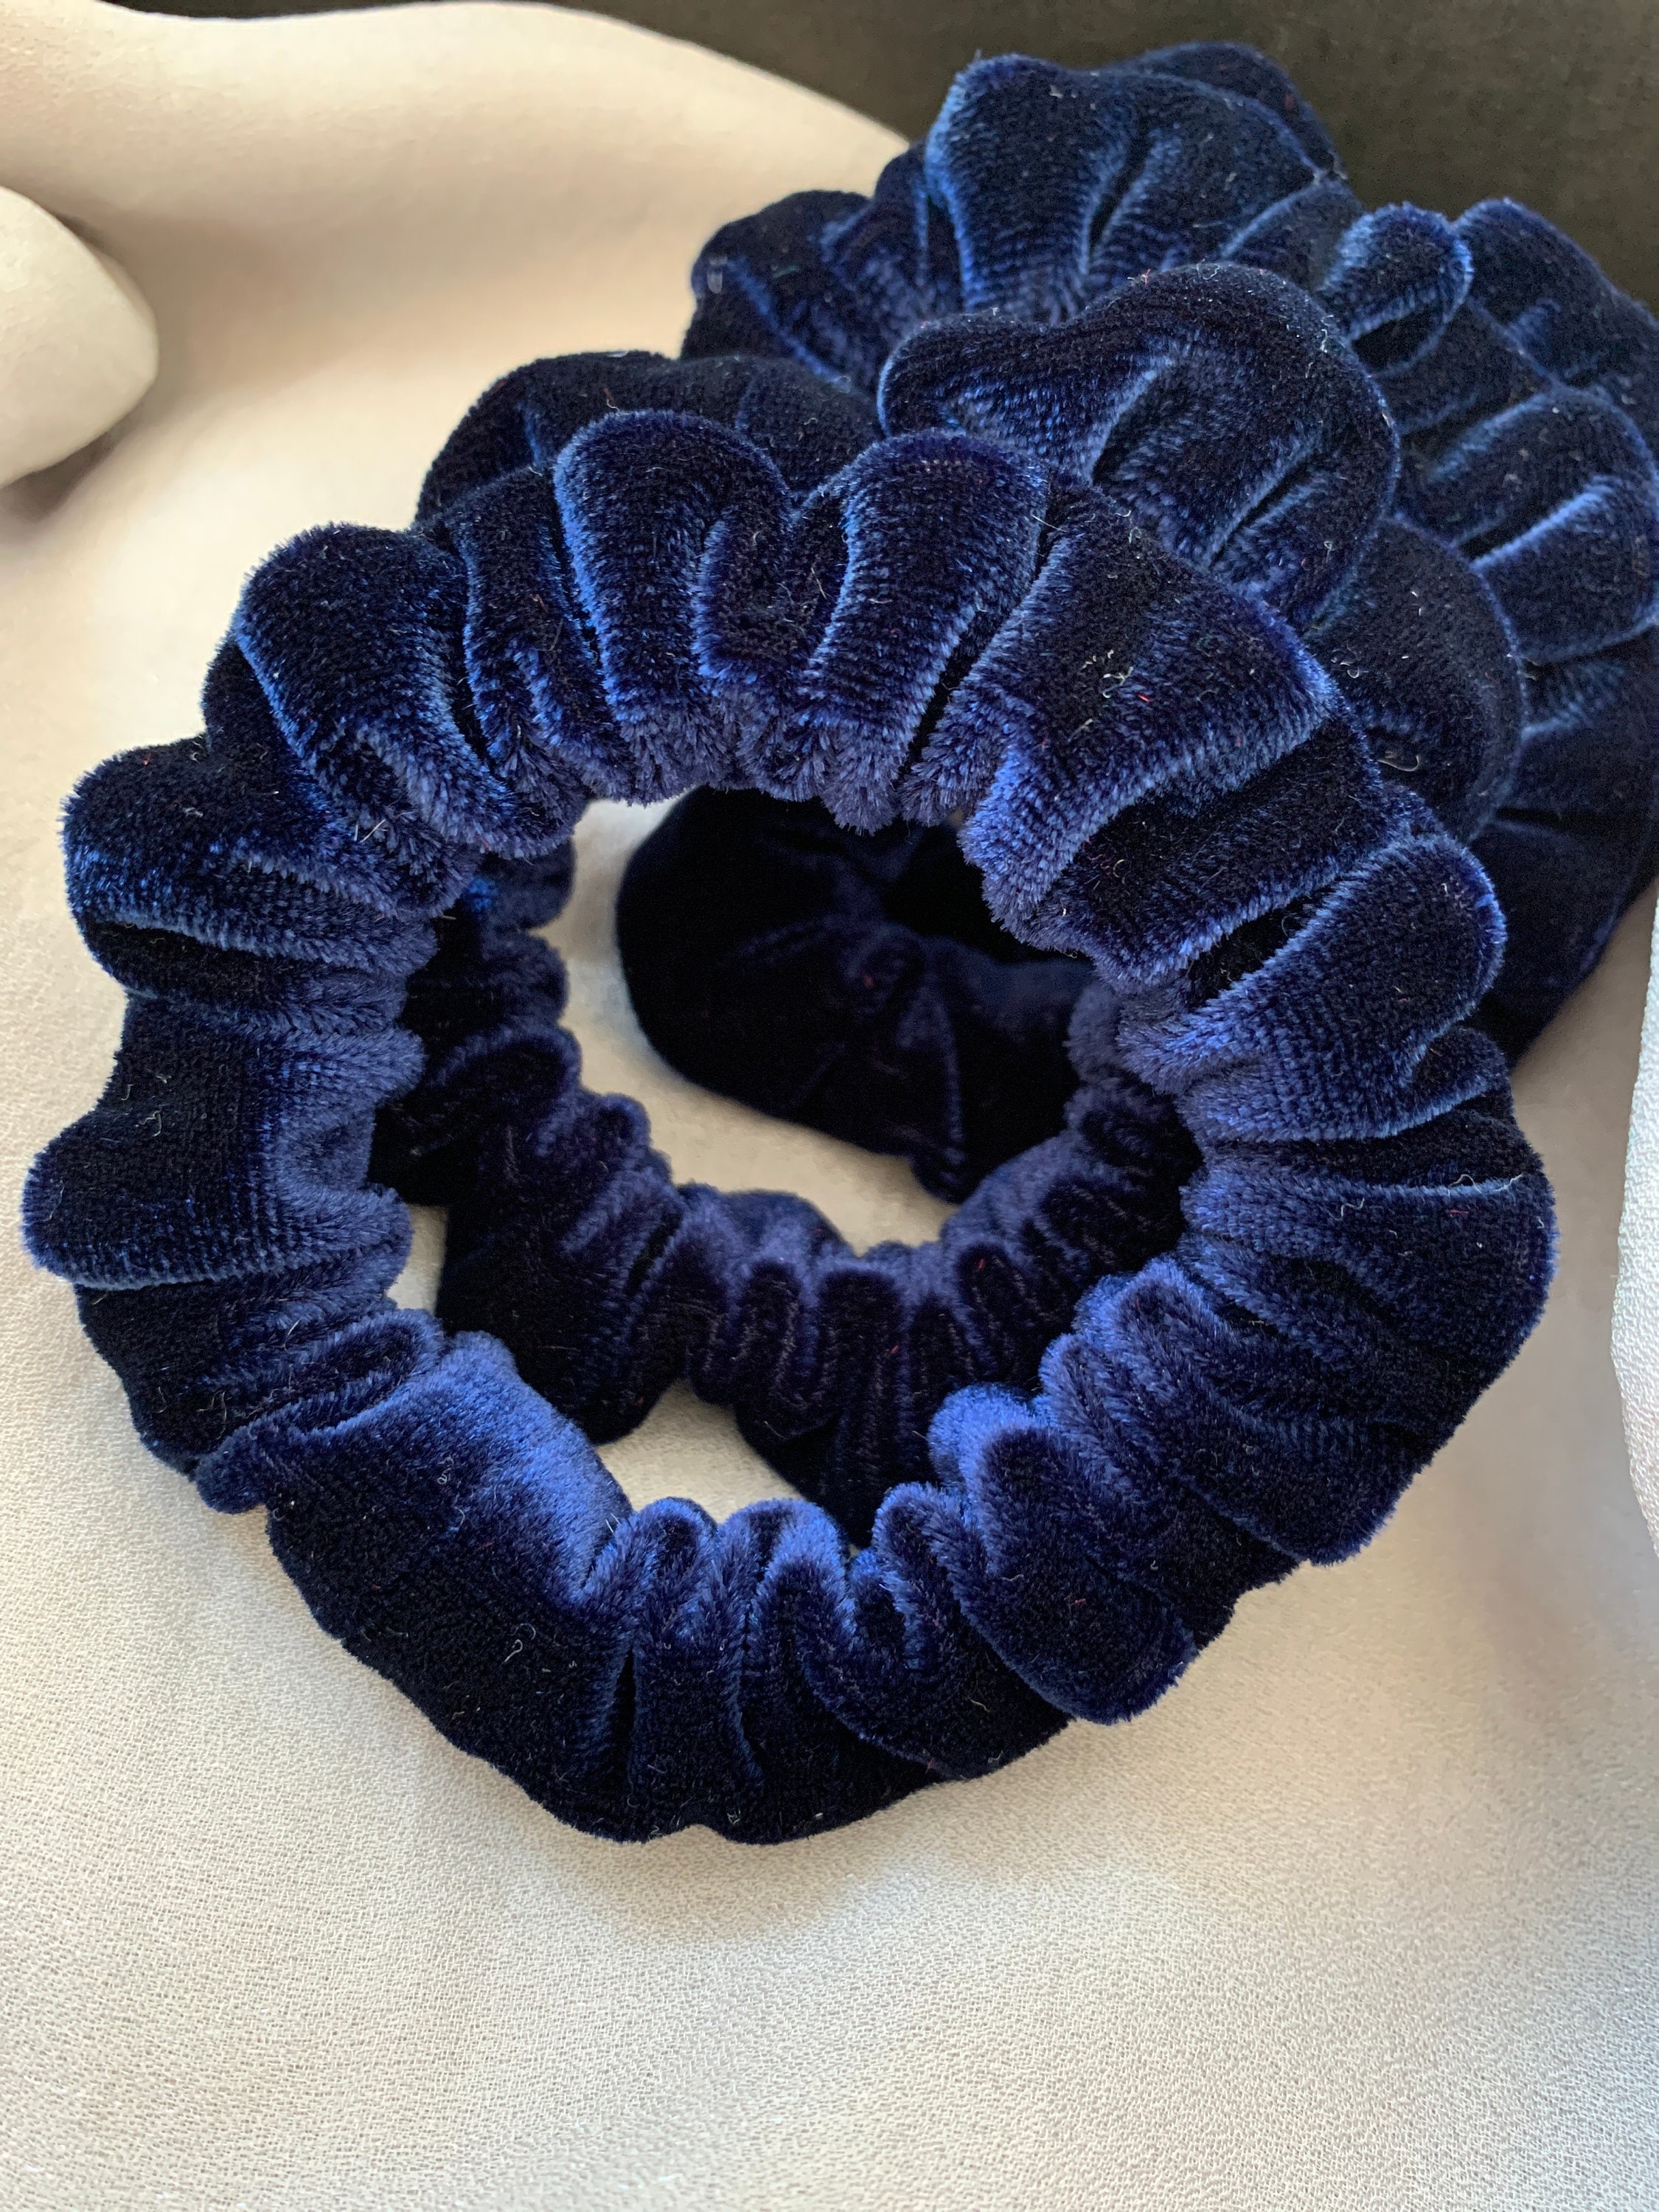 Chiffon Scrunchy Hair Accessories Big Royal Blue Velvet Scrunchies Gifts for Girls Handmade by Just Scrunchies Velvet Hair Bows